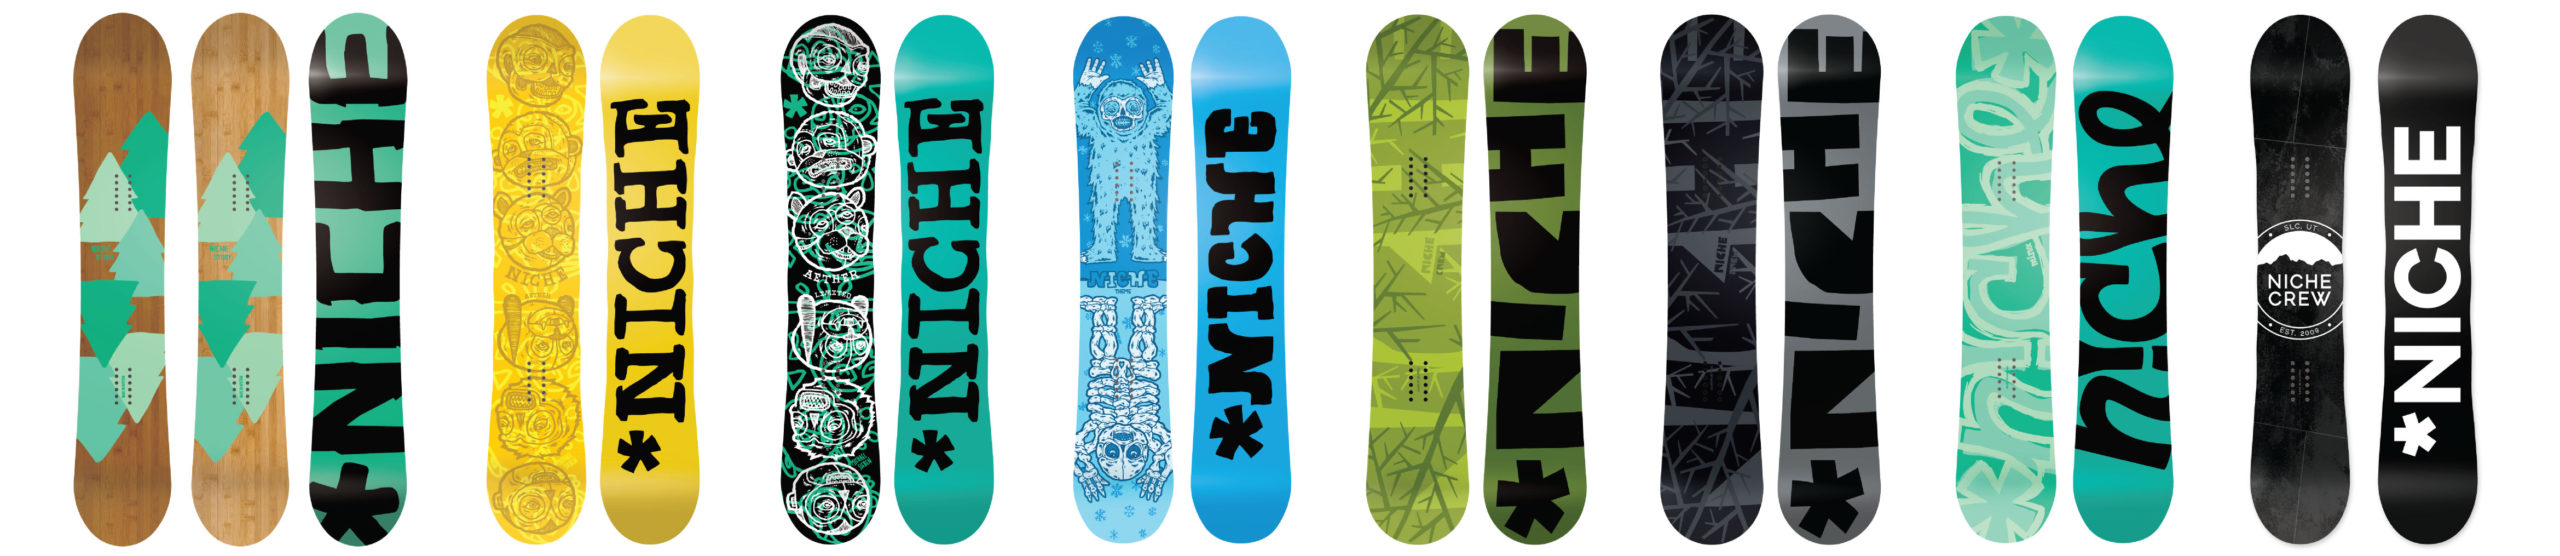 2012/13 Niche Snowboards graphics